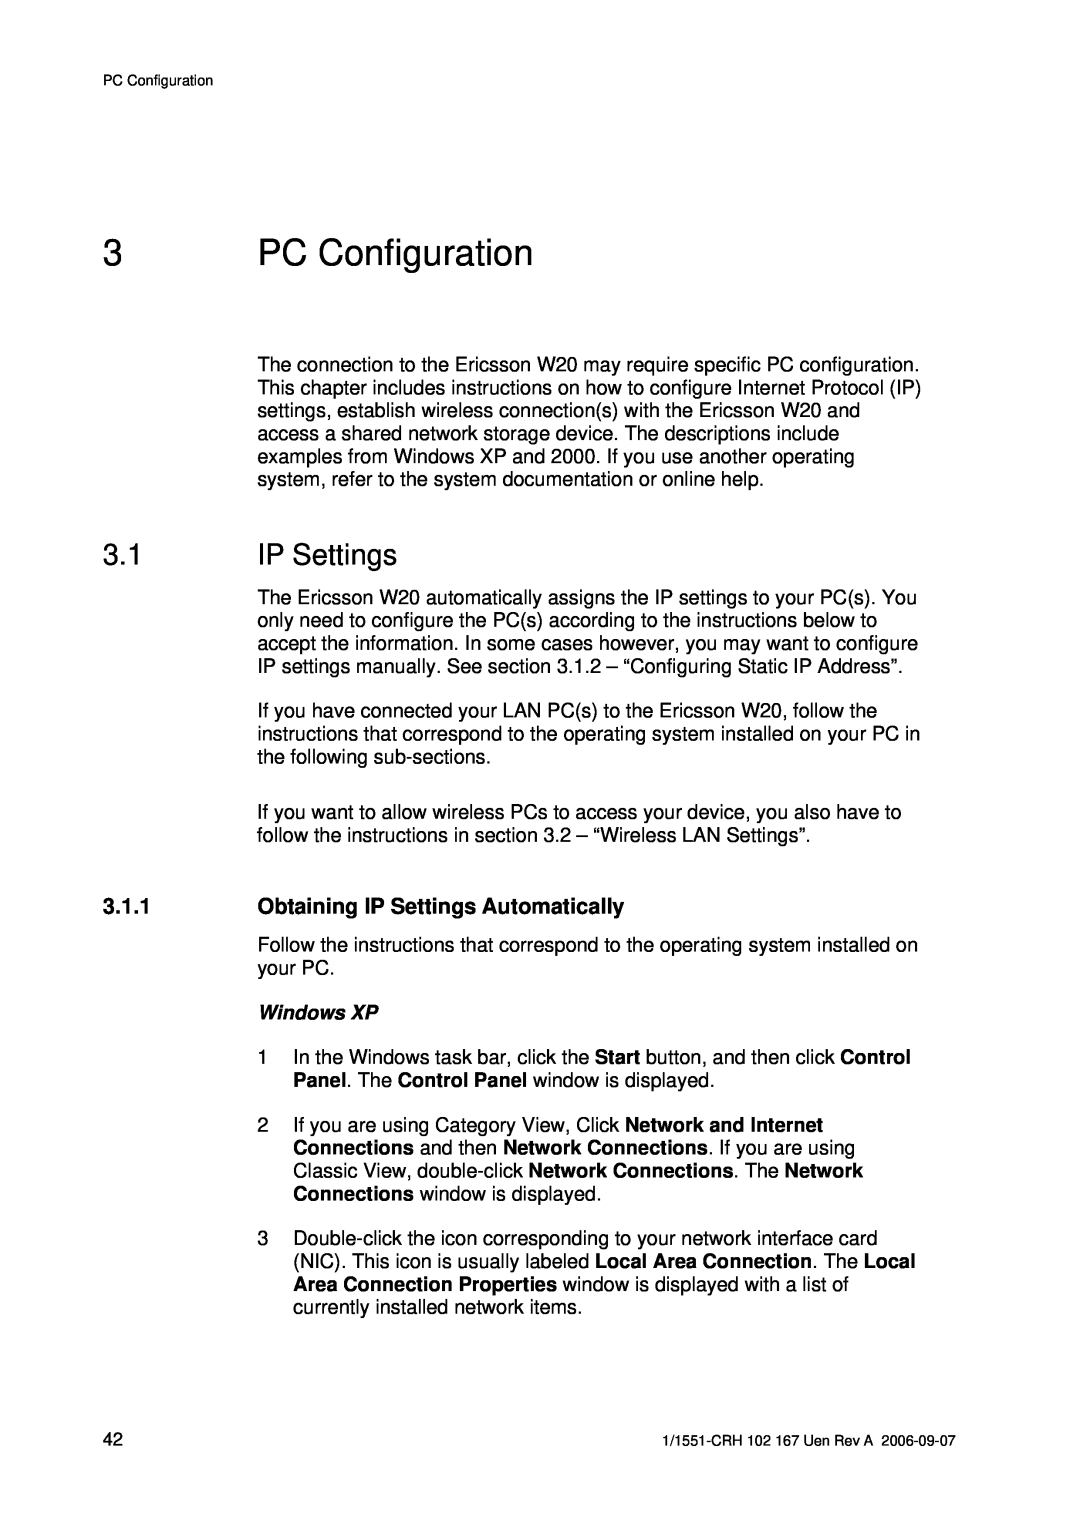 Ericsson W20 manual PC Configuration, Obtaining IP Settings Automatically, Windows XP 